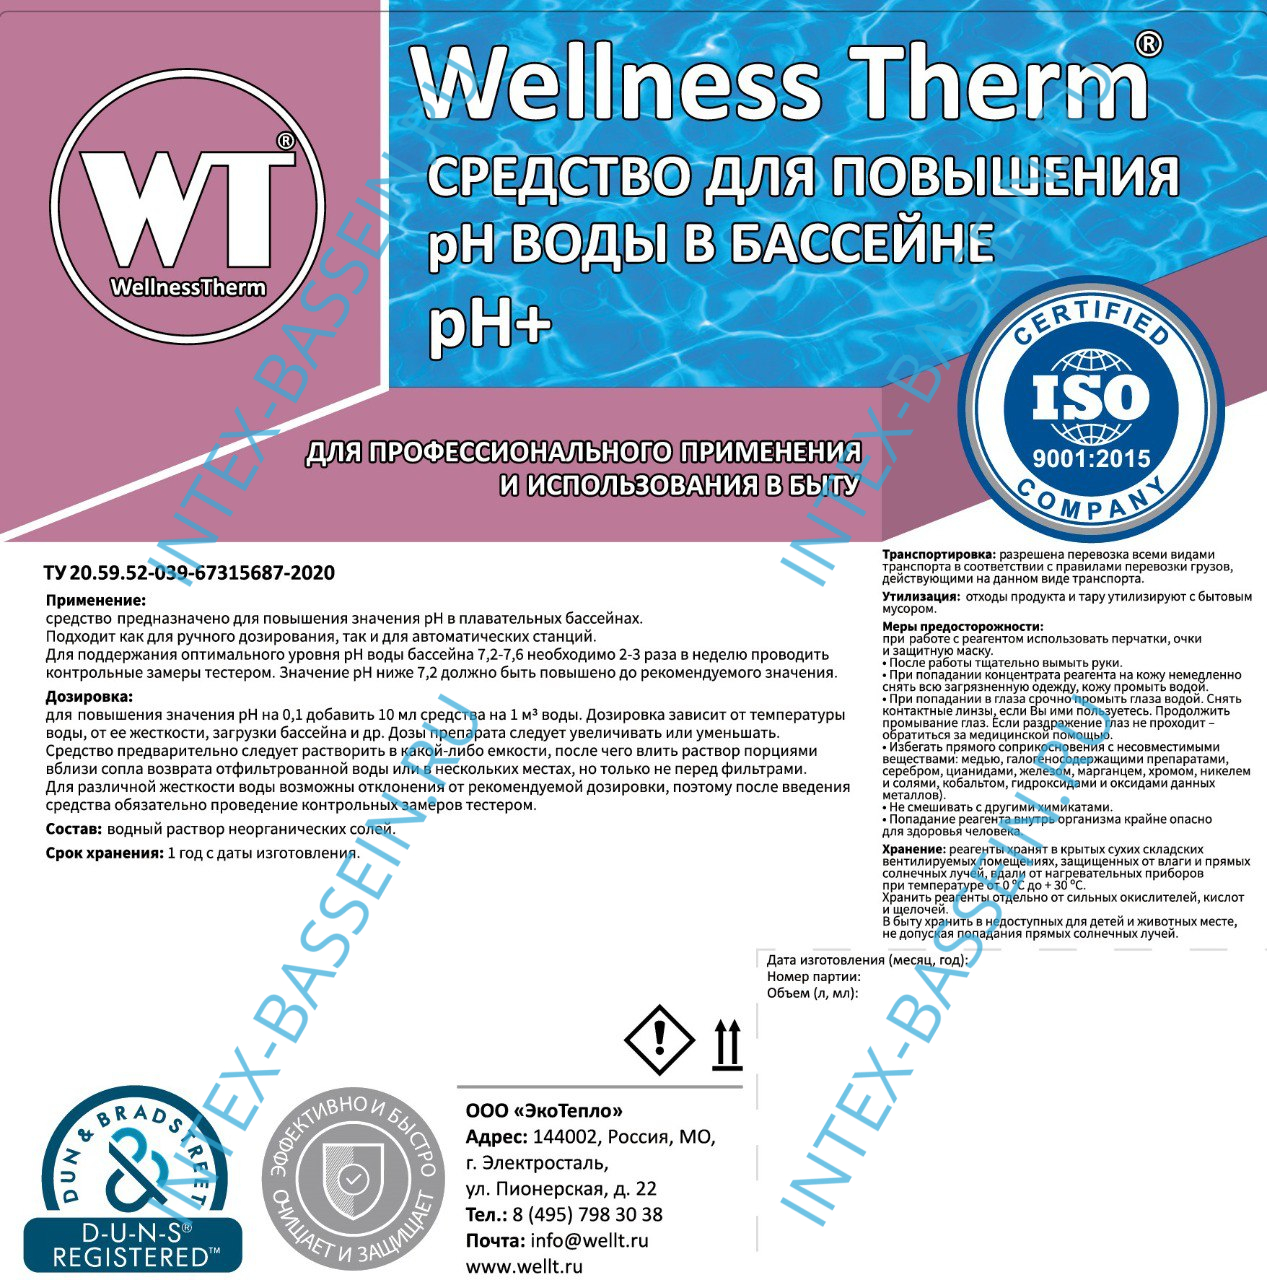 Ph-плюс Wellness Therm (средство для повышения уровня Ph воды в бассейне) 5 л, арт. 312712